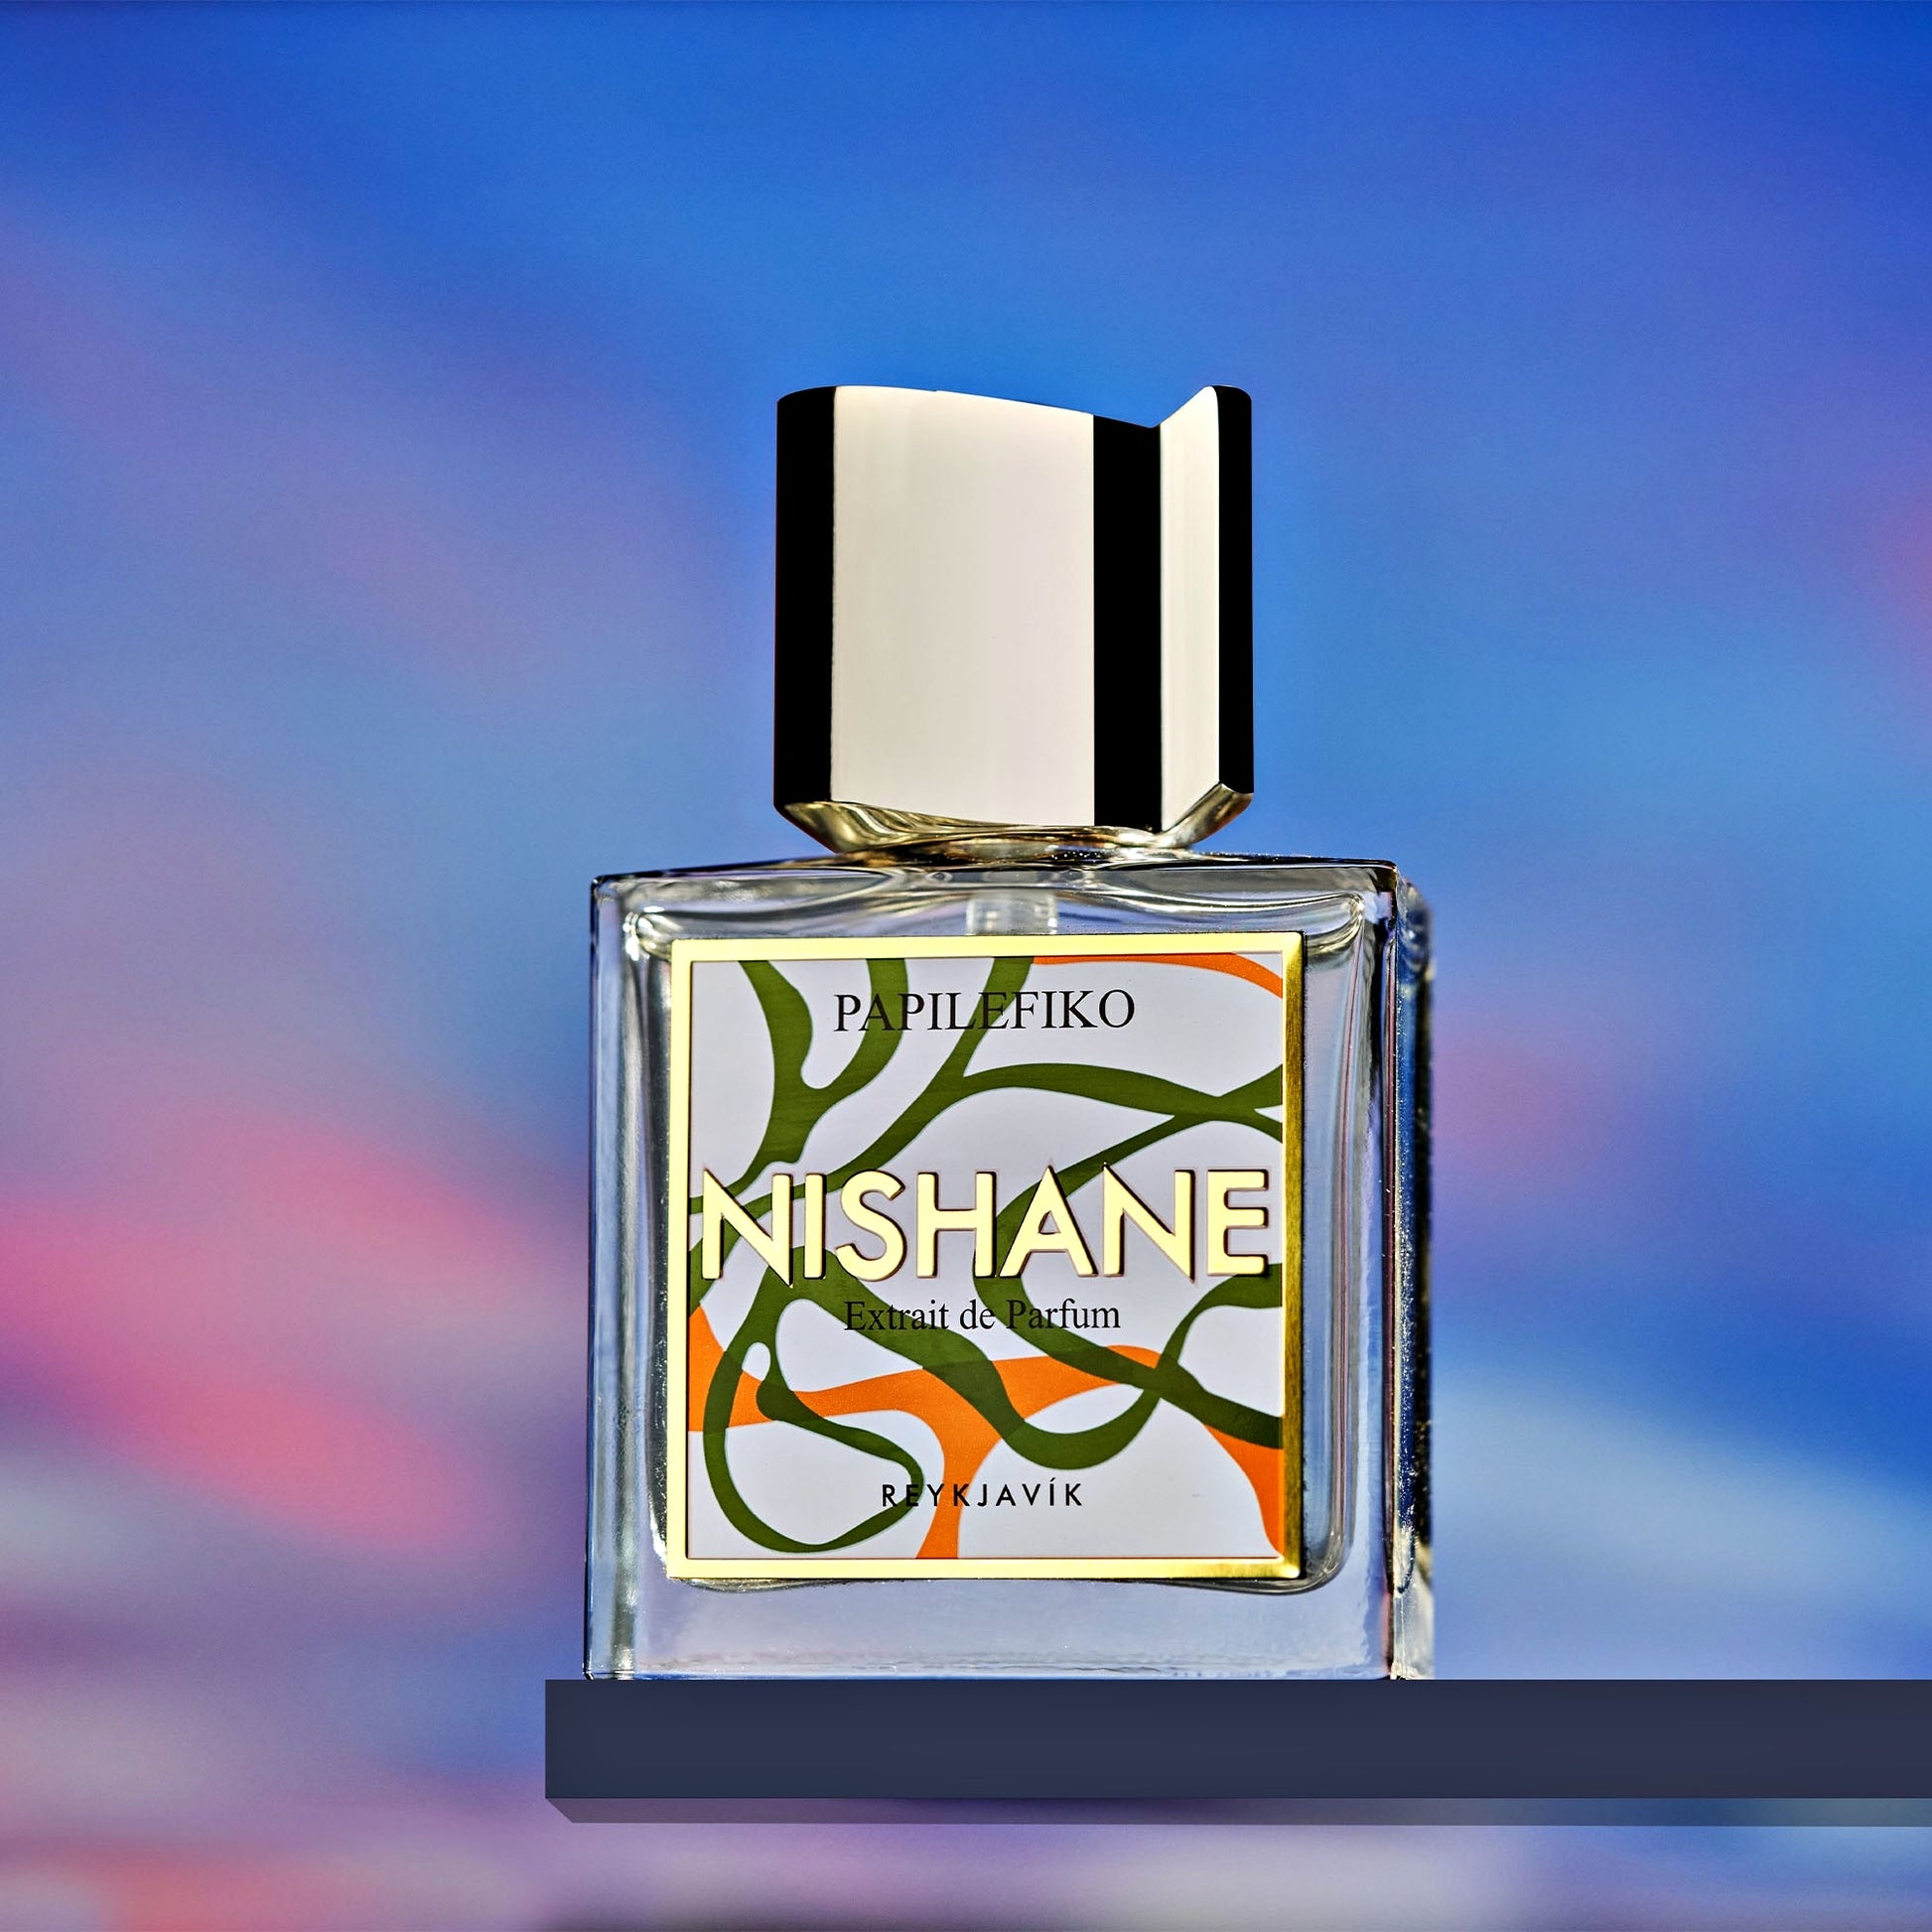 Papilefiko Nishane Extrait de Parfum 50ml - ON DEMAND BARBERS OSLO NORWAY